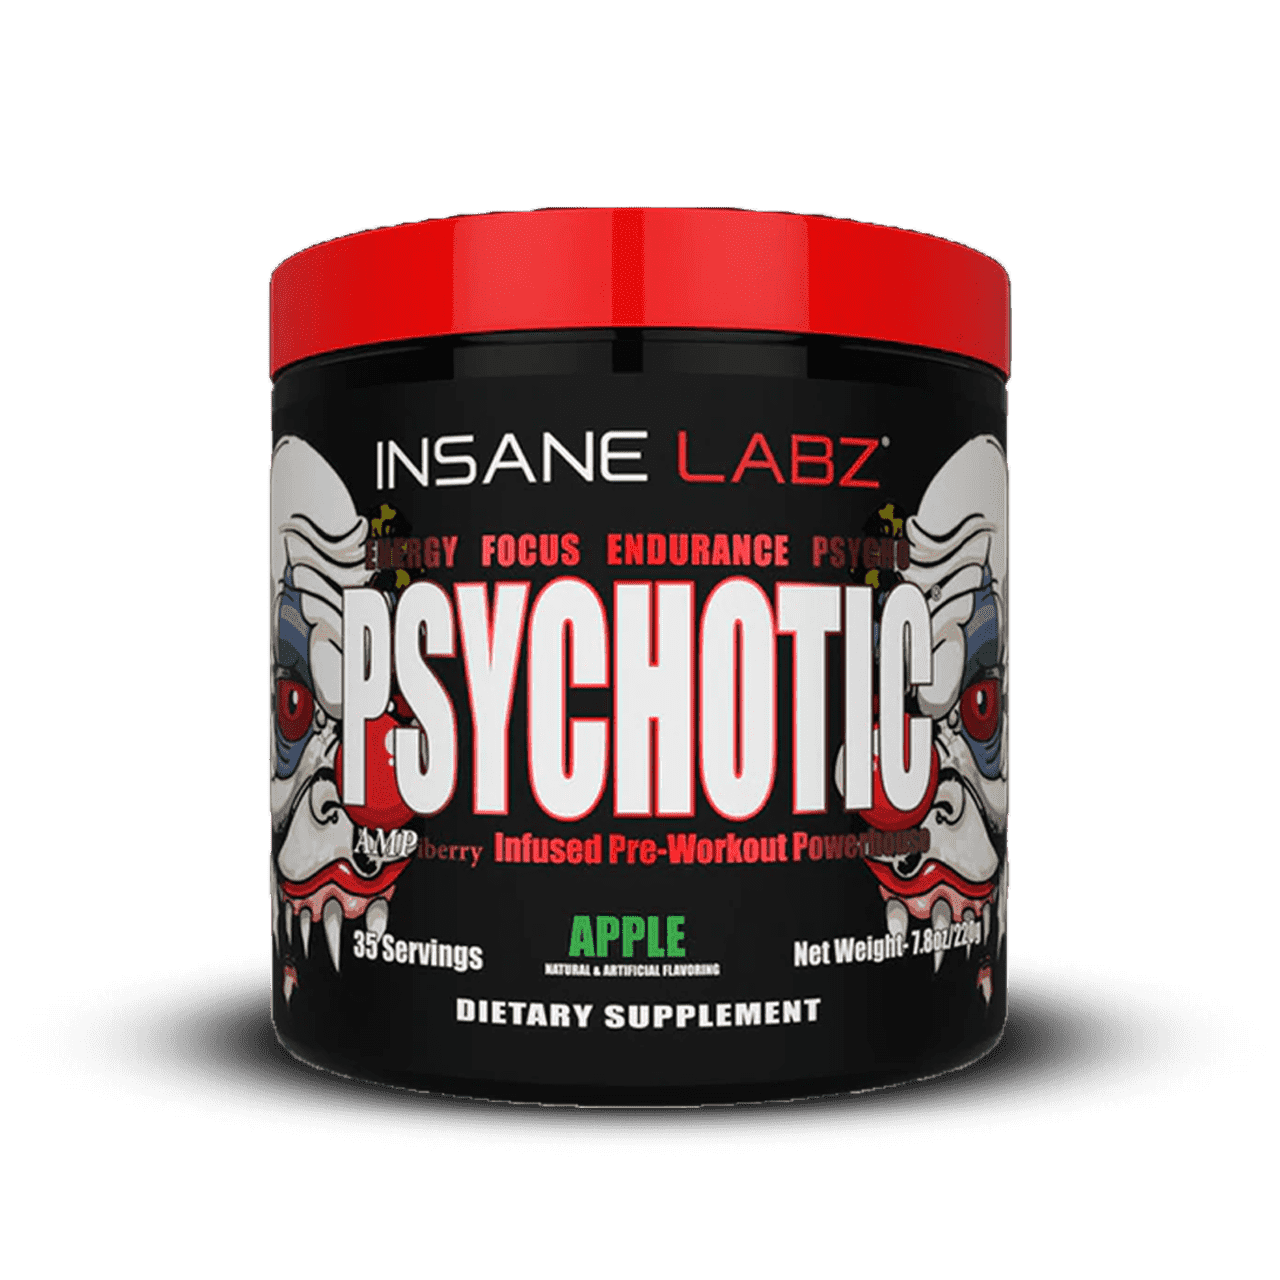 Insane Labz Psychotic - Apple